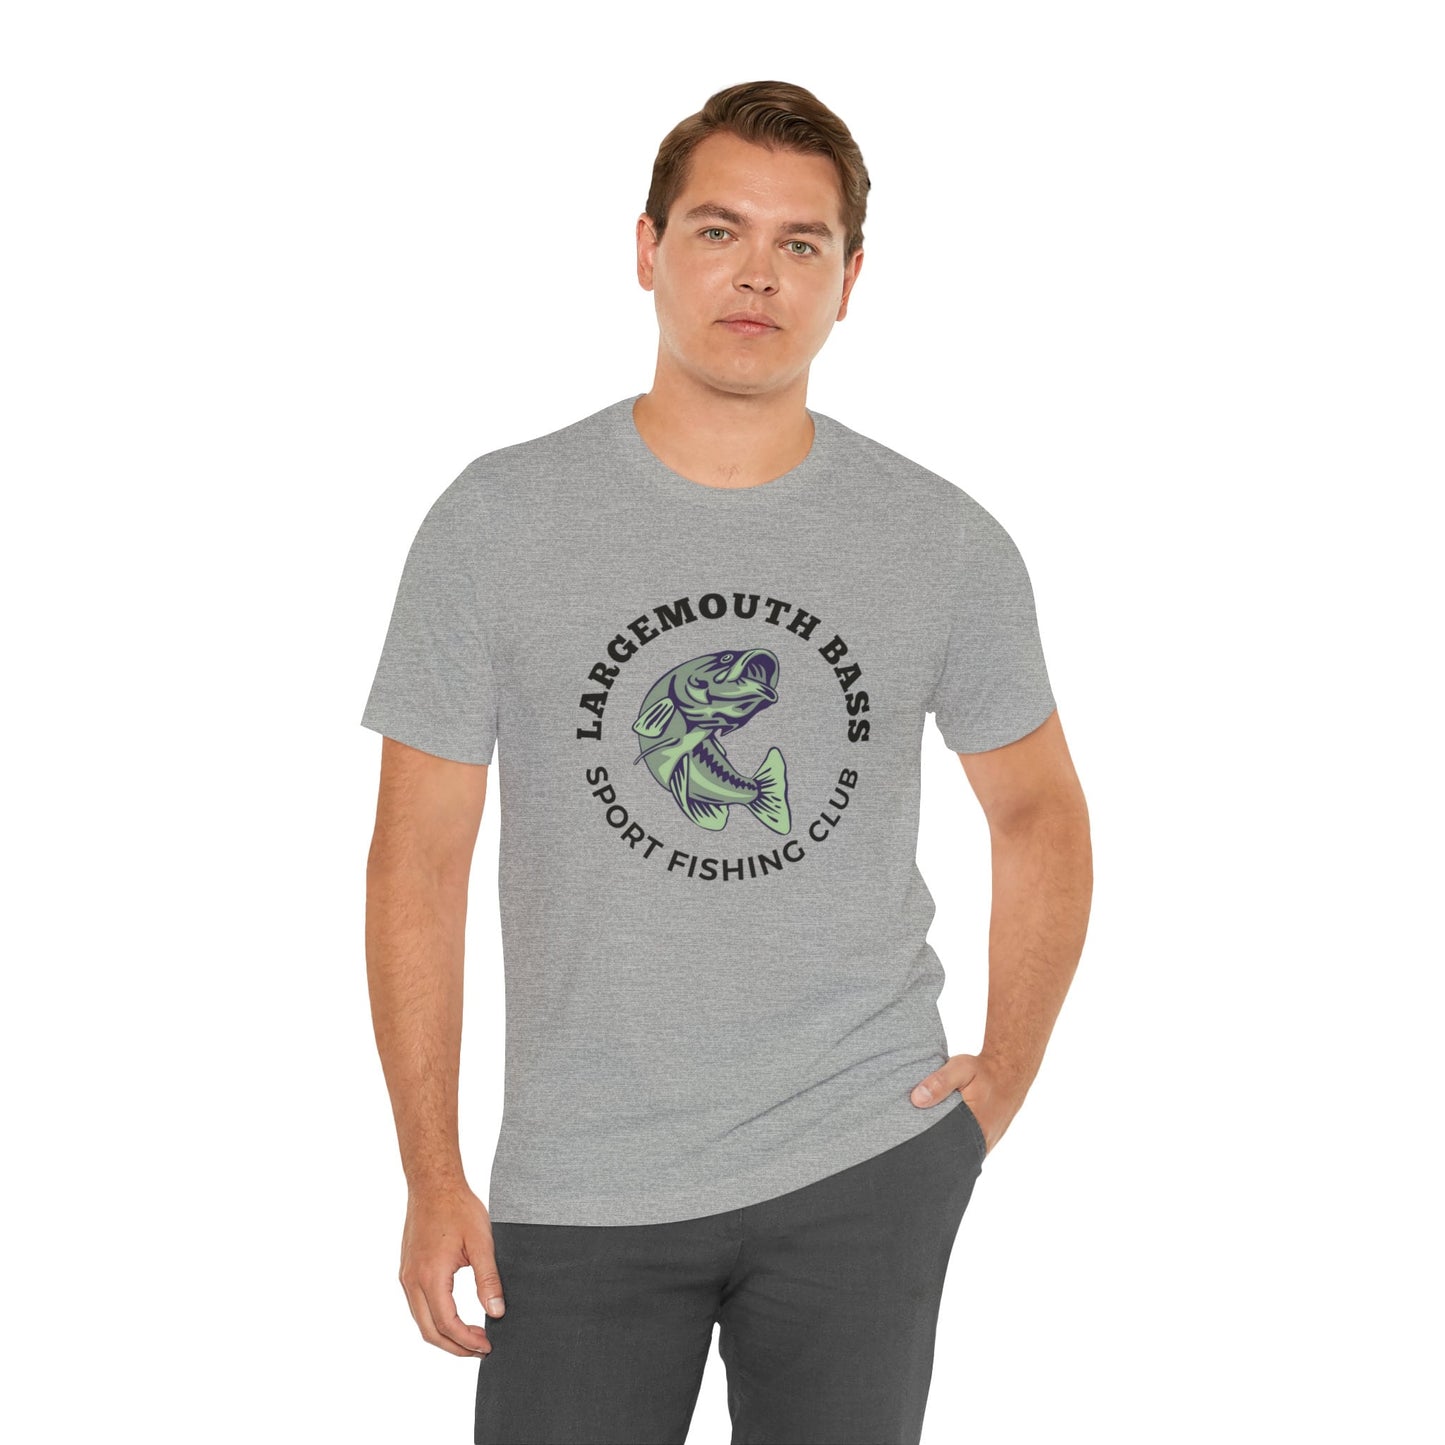 LargeMouth Bass Sports fishing Club T-Shirt